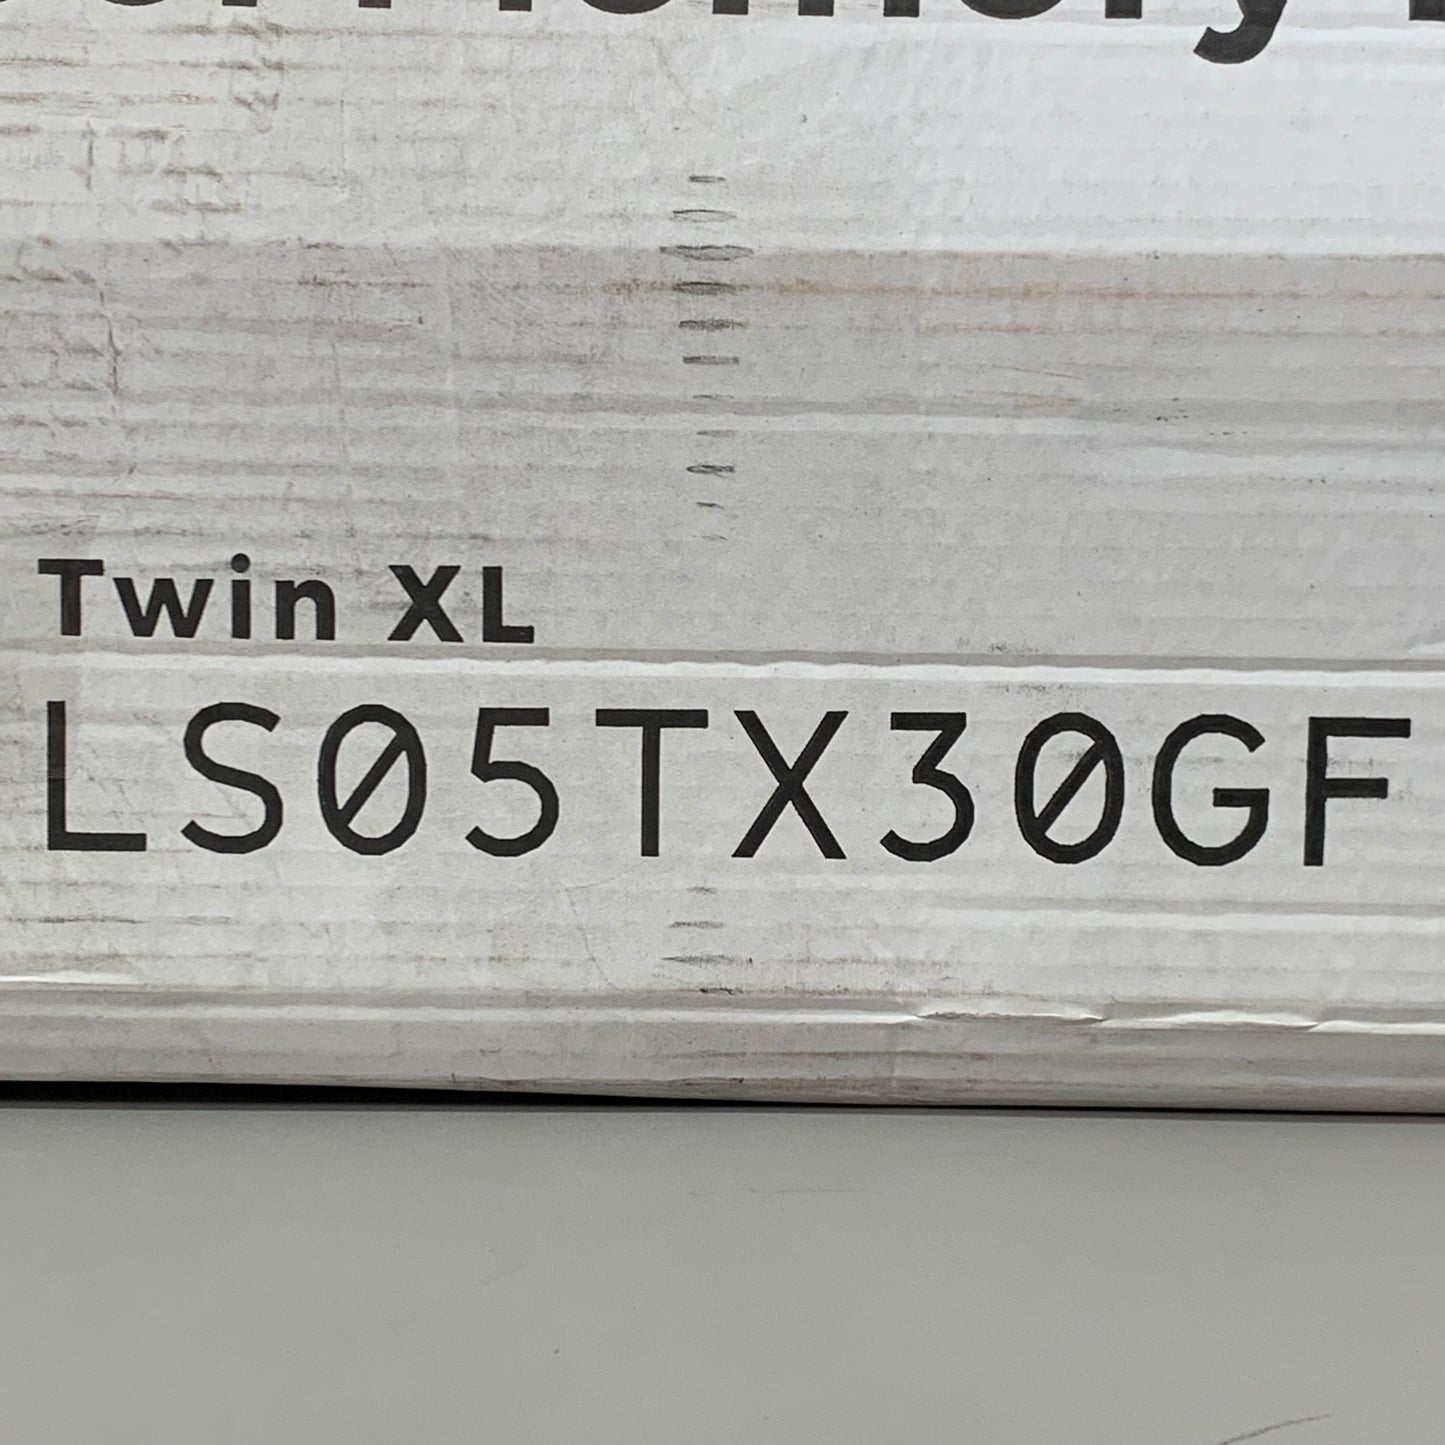 LINENSPA 5" Gel Memory Foam Mattress Medium Firm Twin XL White LS05TX30GF New